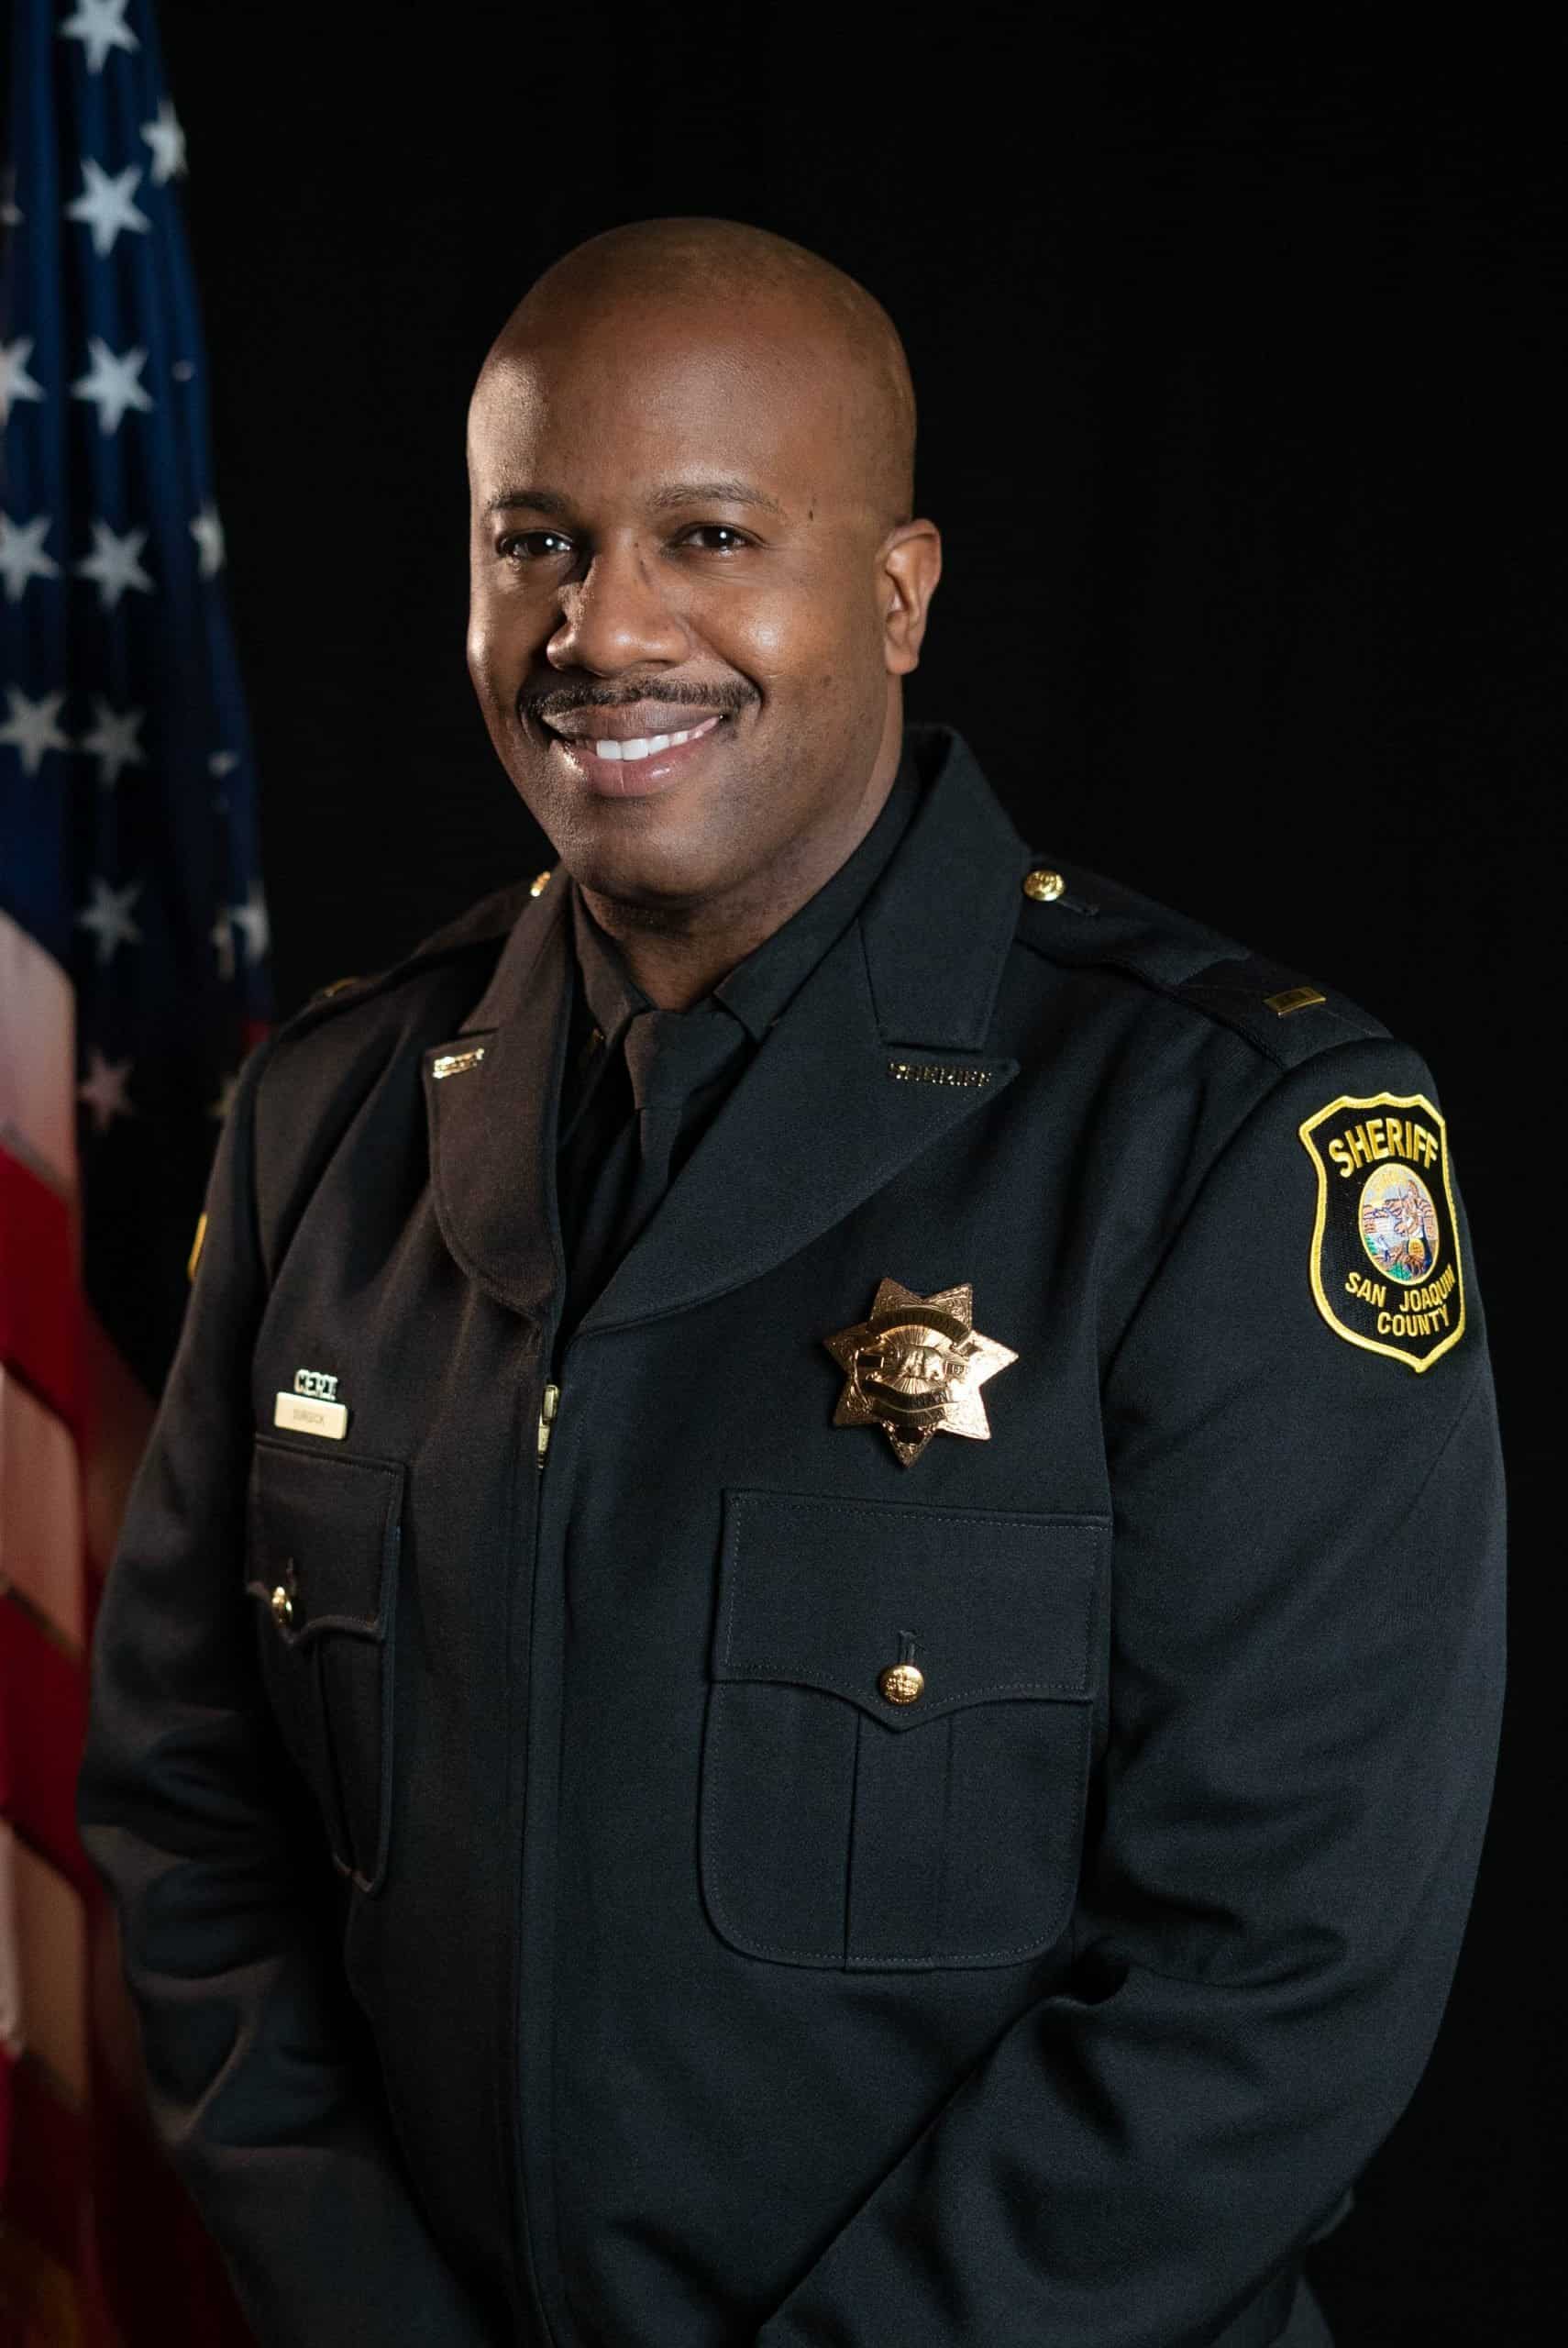 San Joaquin County Sheriff's Office Correctional Lieutenant Jamiyl Surgick